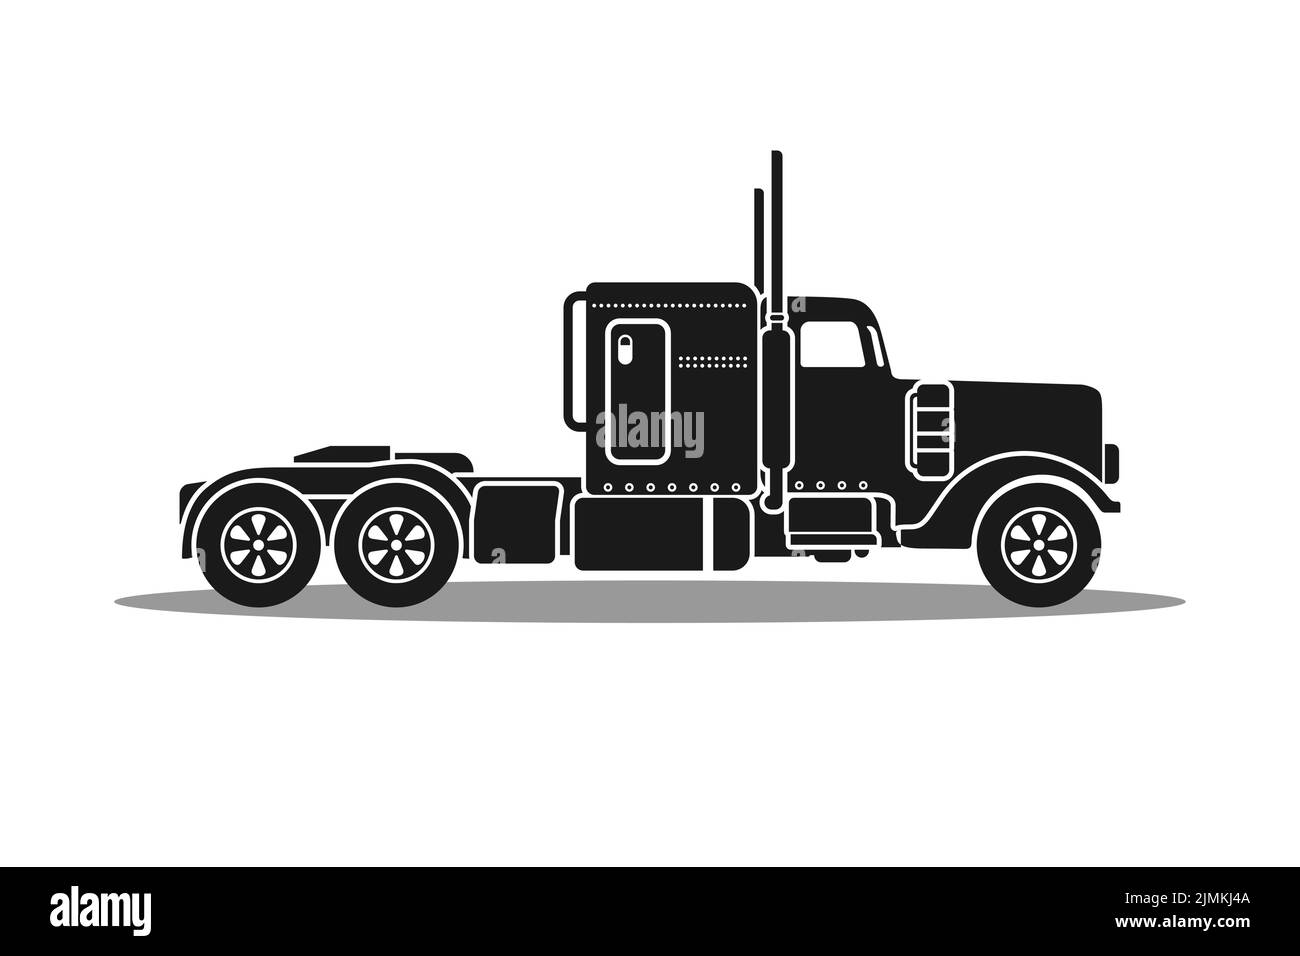 Lorry Truck Vector Design Illustration Stock Vector